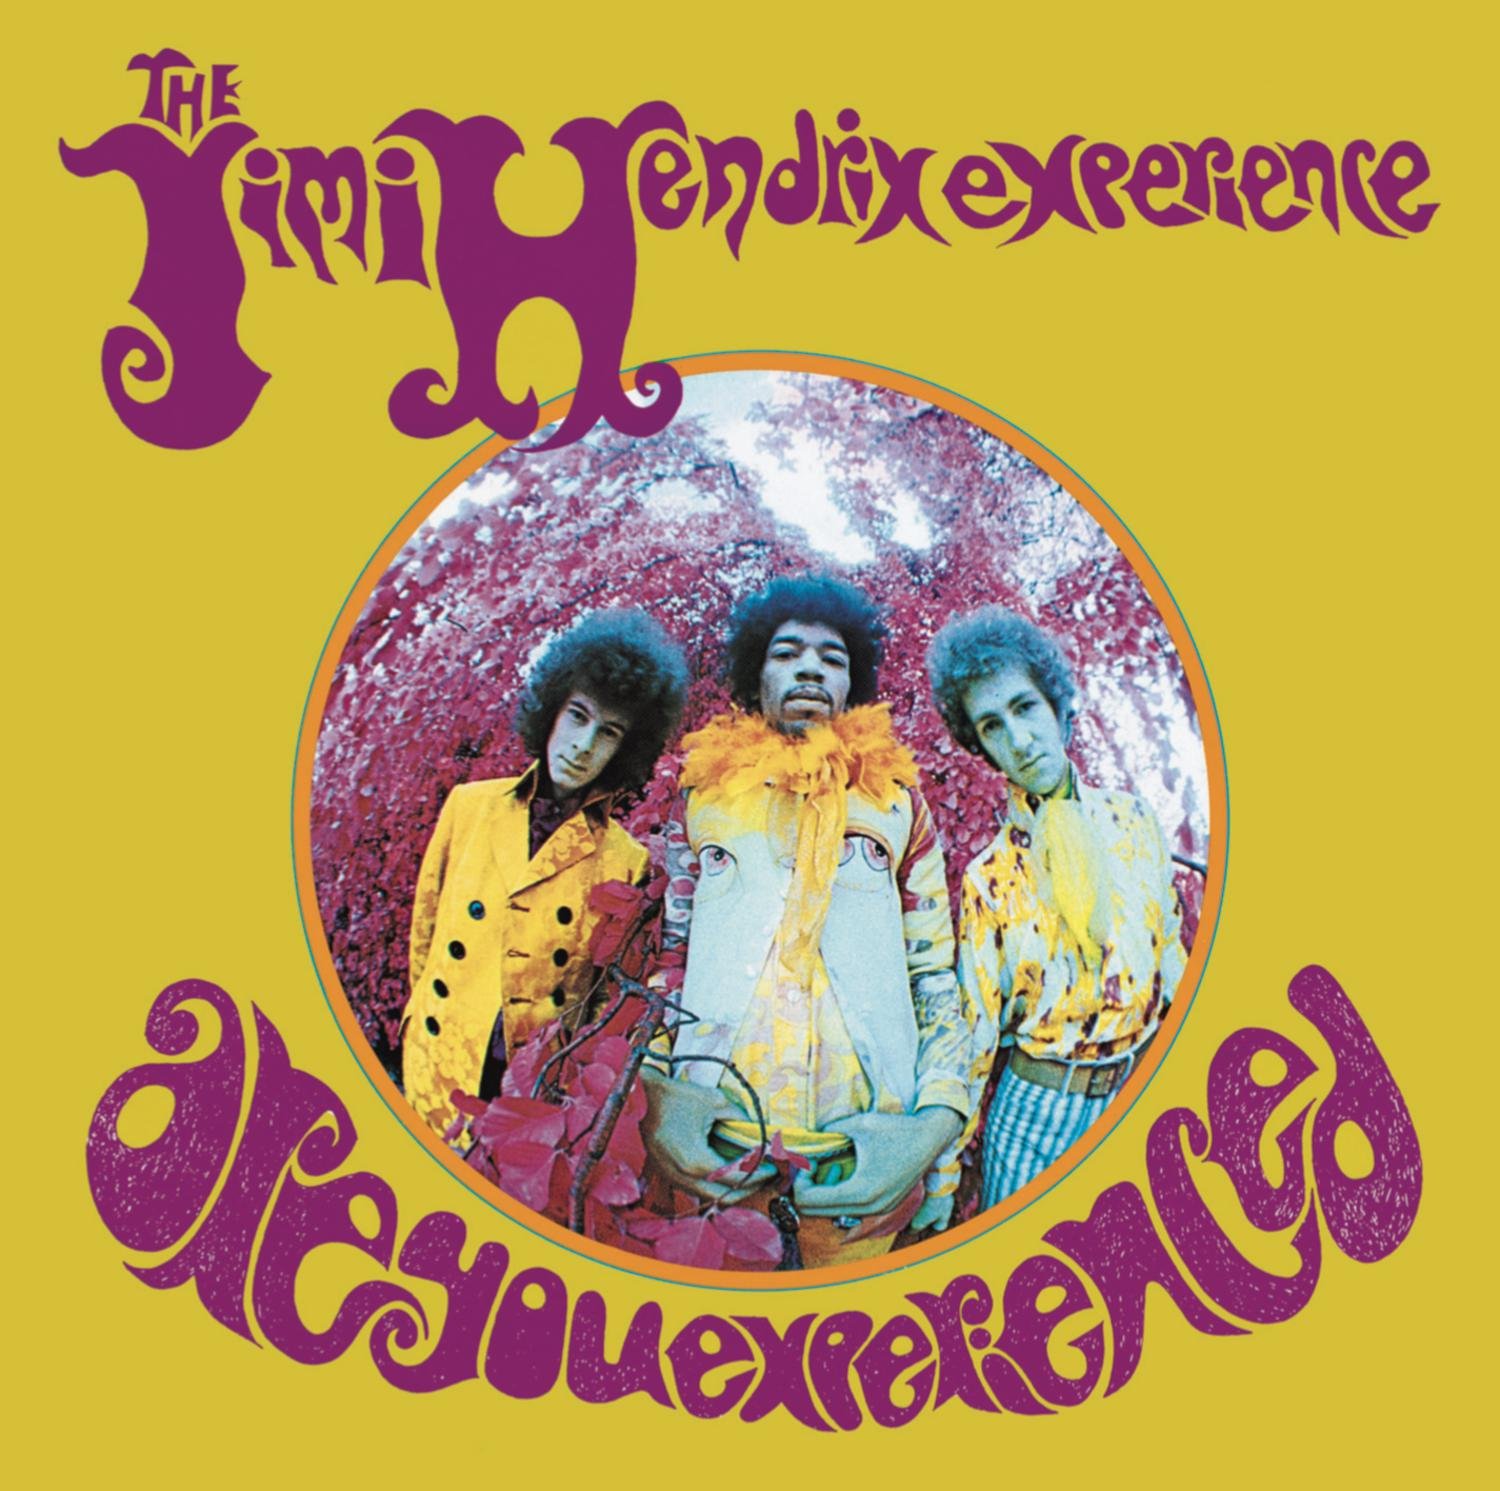 Jimi Hendrix - Are You Experienced?